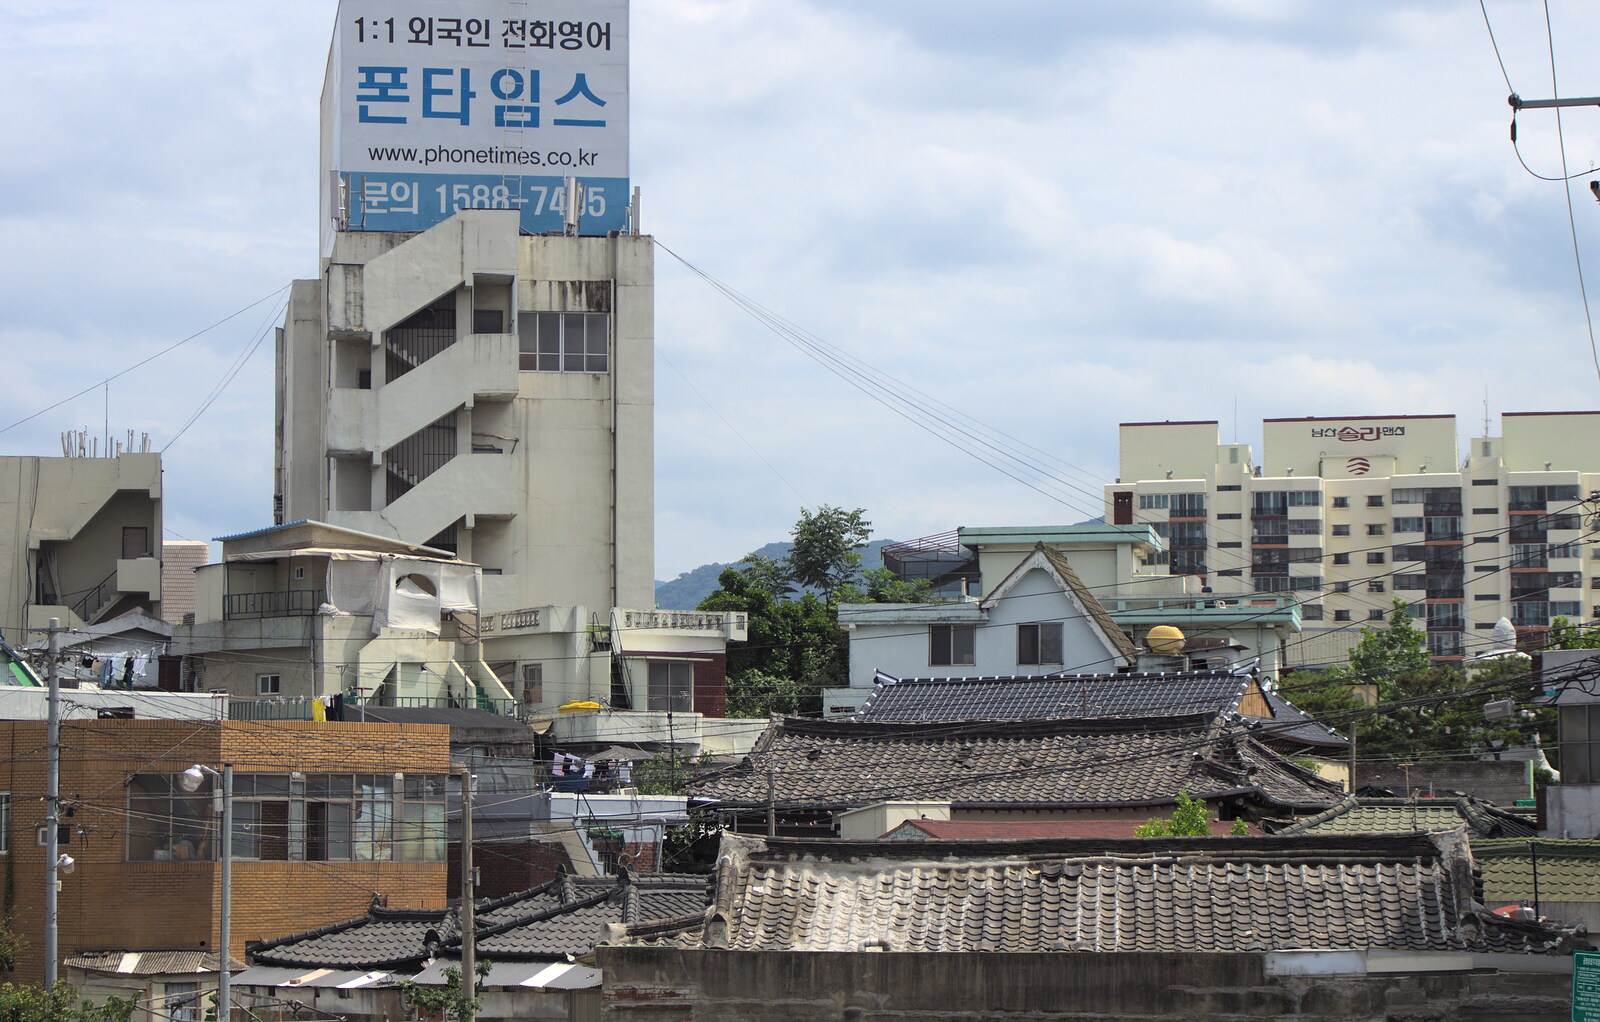 Shacks and towers from Seomun Market, Daegu, South Korea - 1st July 2012